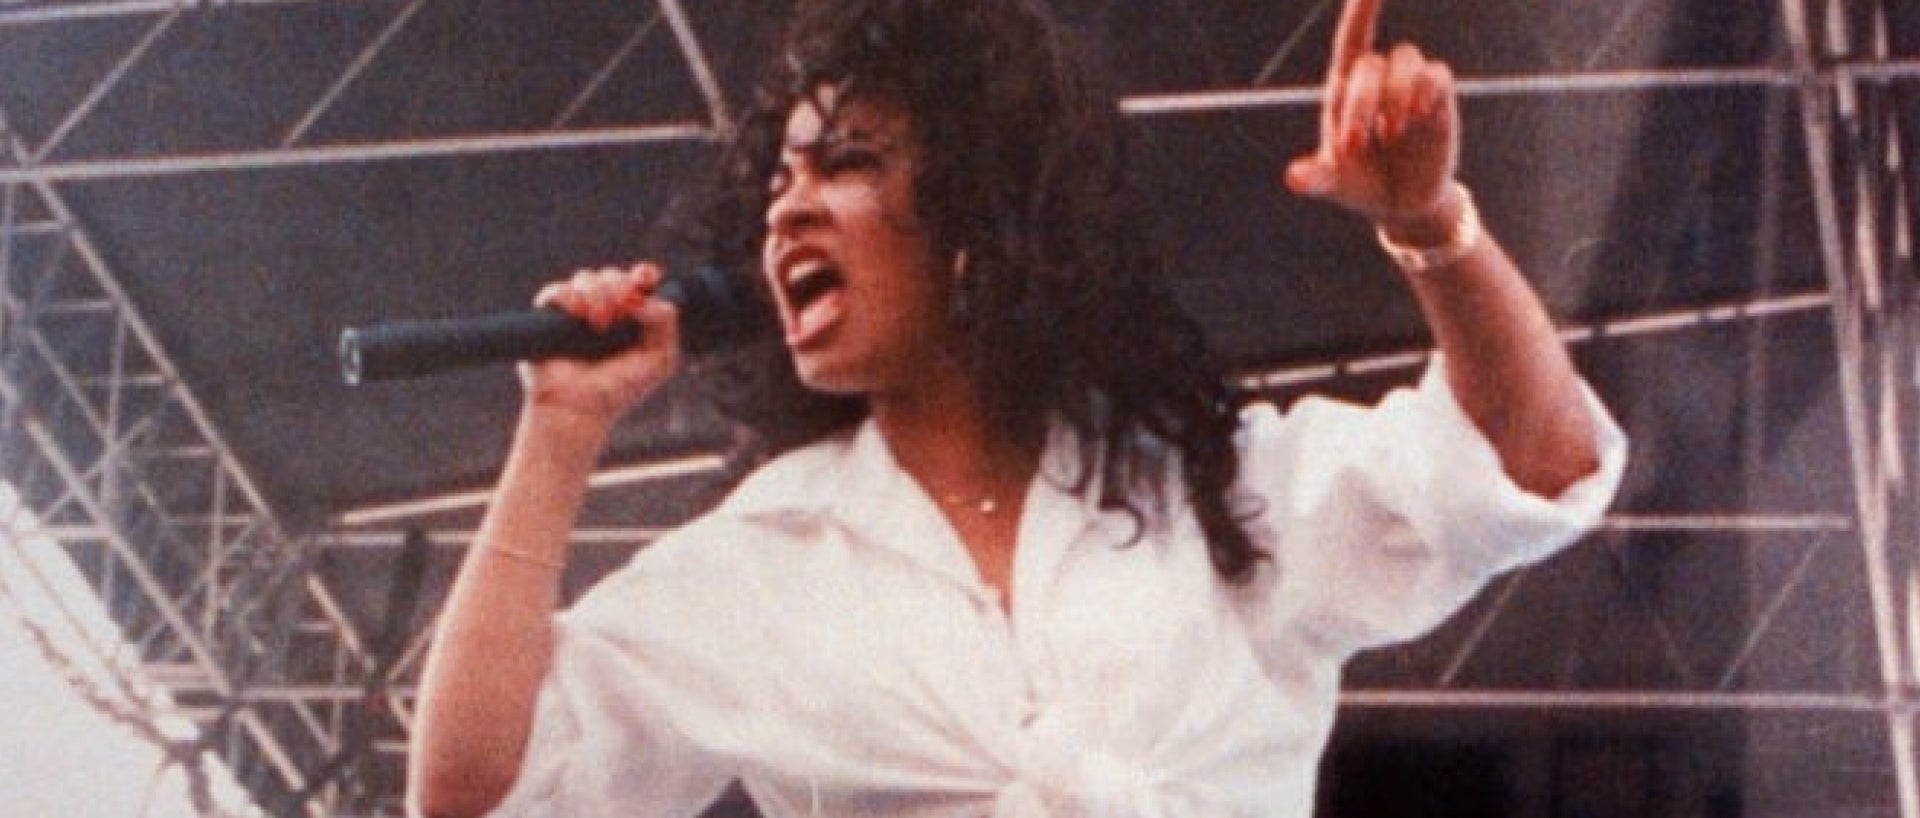 Singer Selena Quintanilla-Pérez on stage